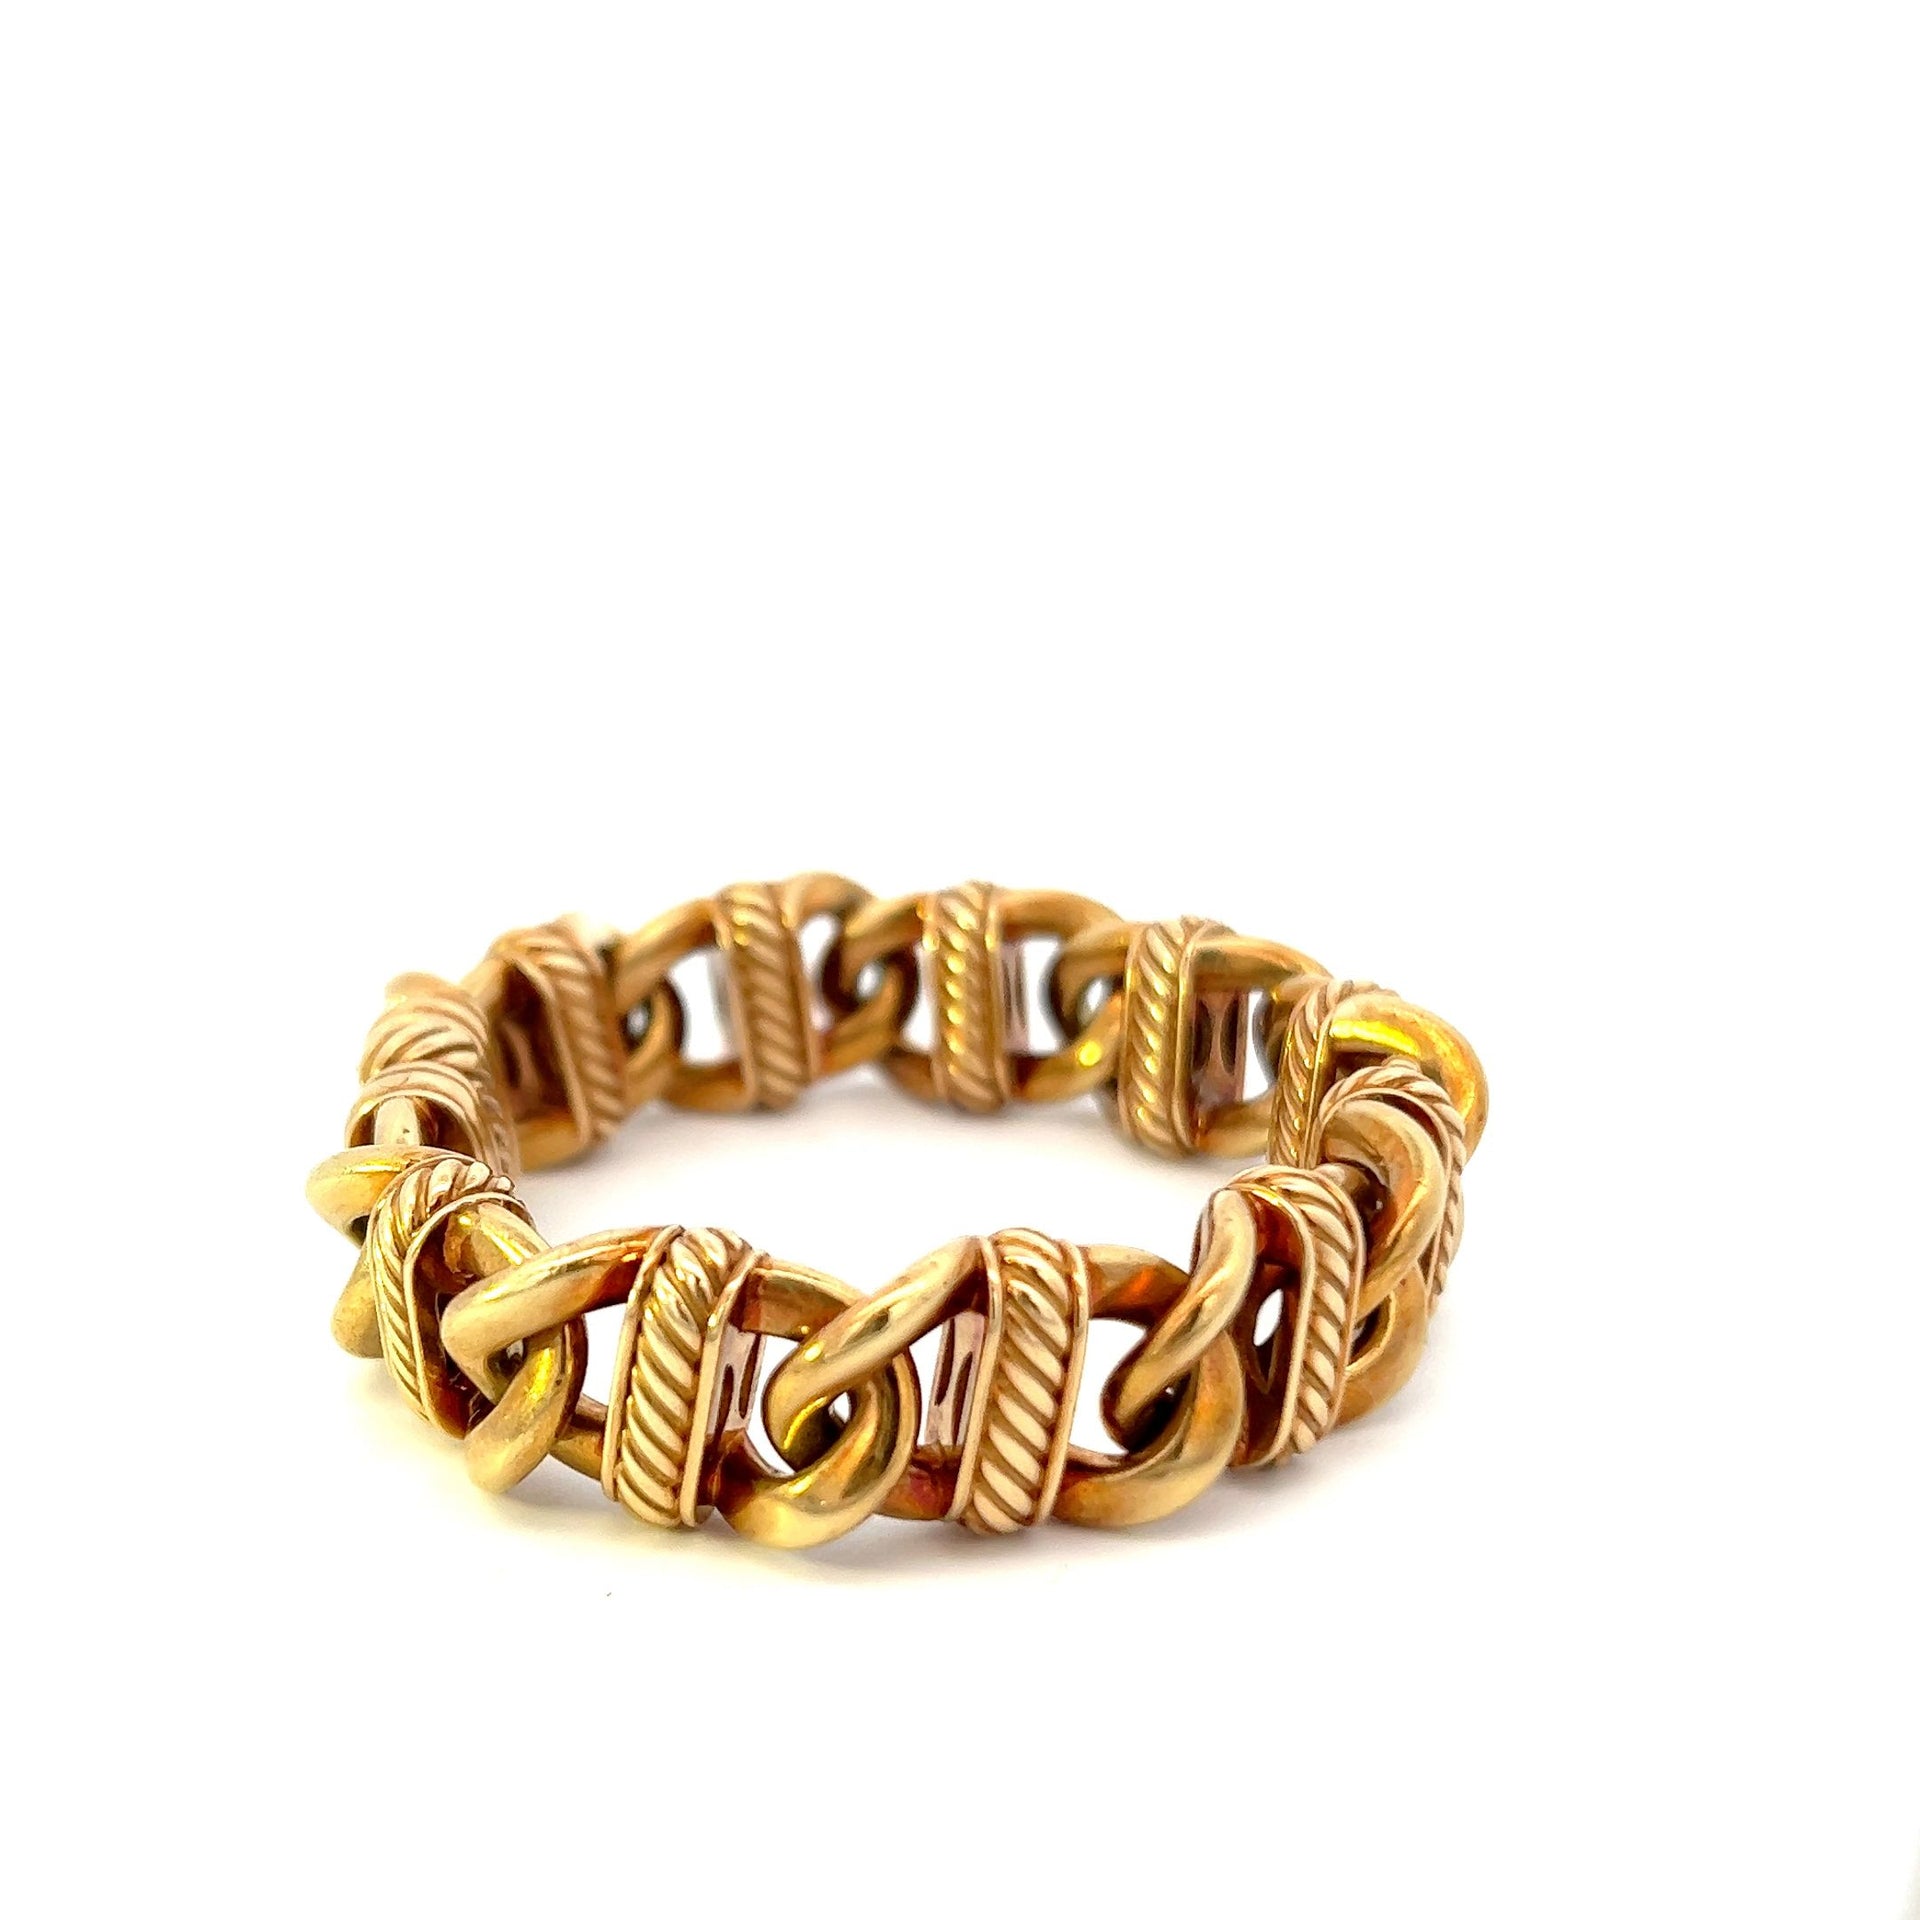 Vintage 18KT Yellow Gold Signed David Yurman Chain Link Bracelet